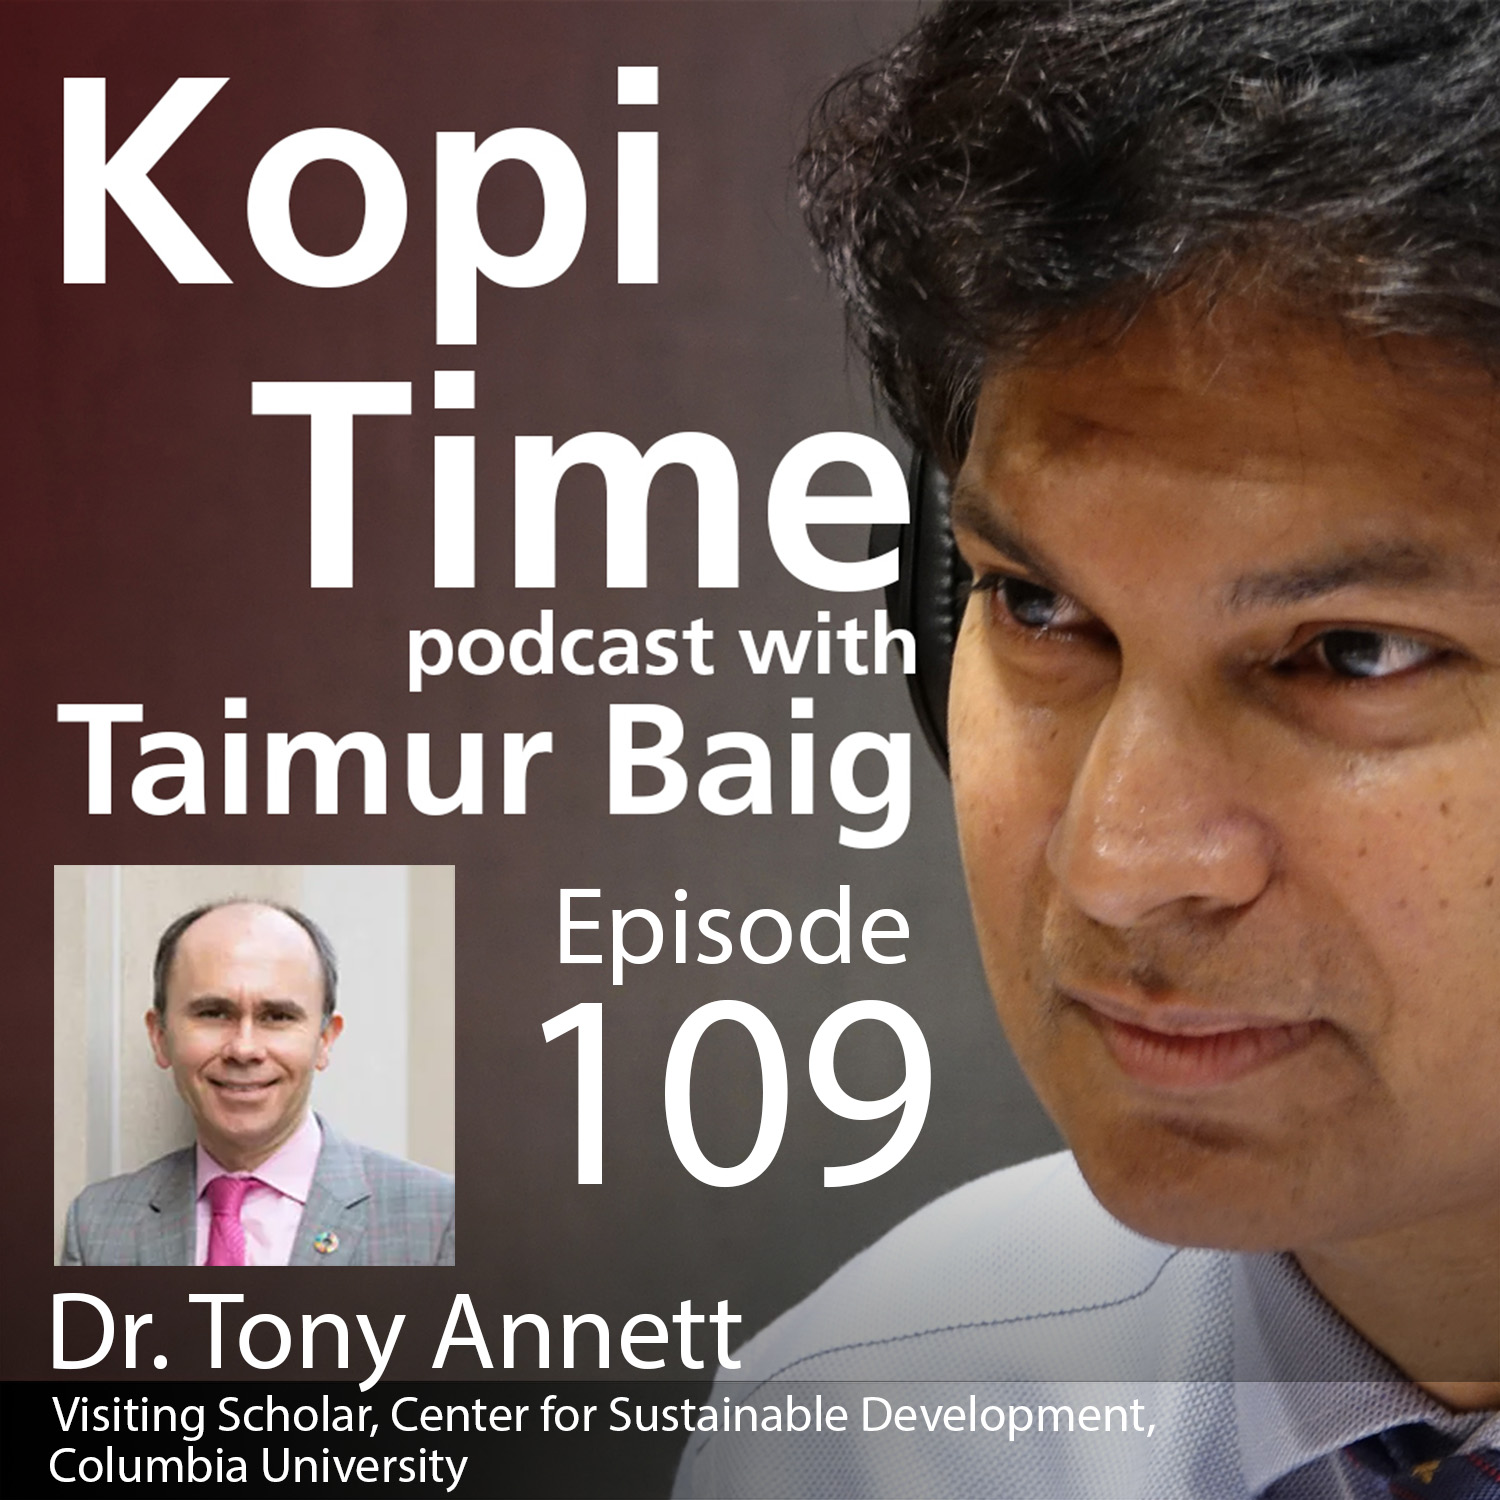 Kopi Time E109 - Dr. Tony Annett on economics and Catholicism